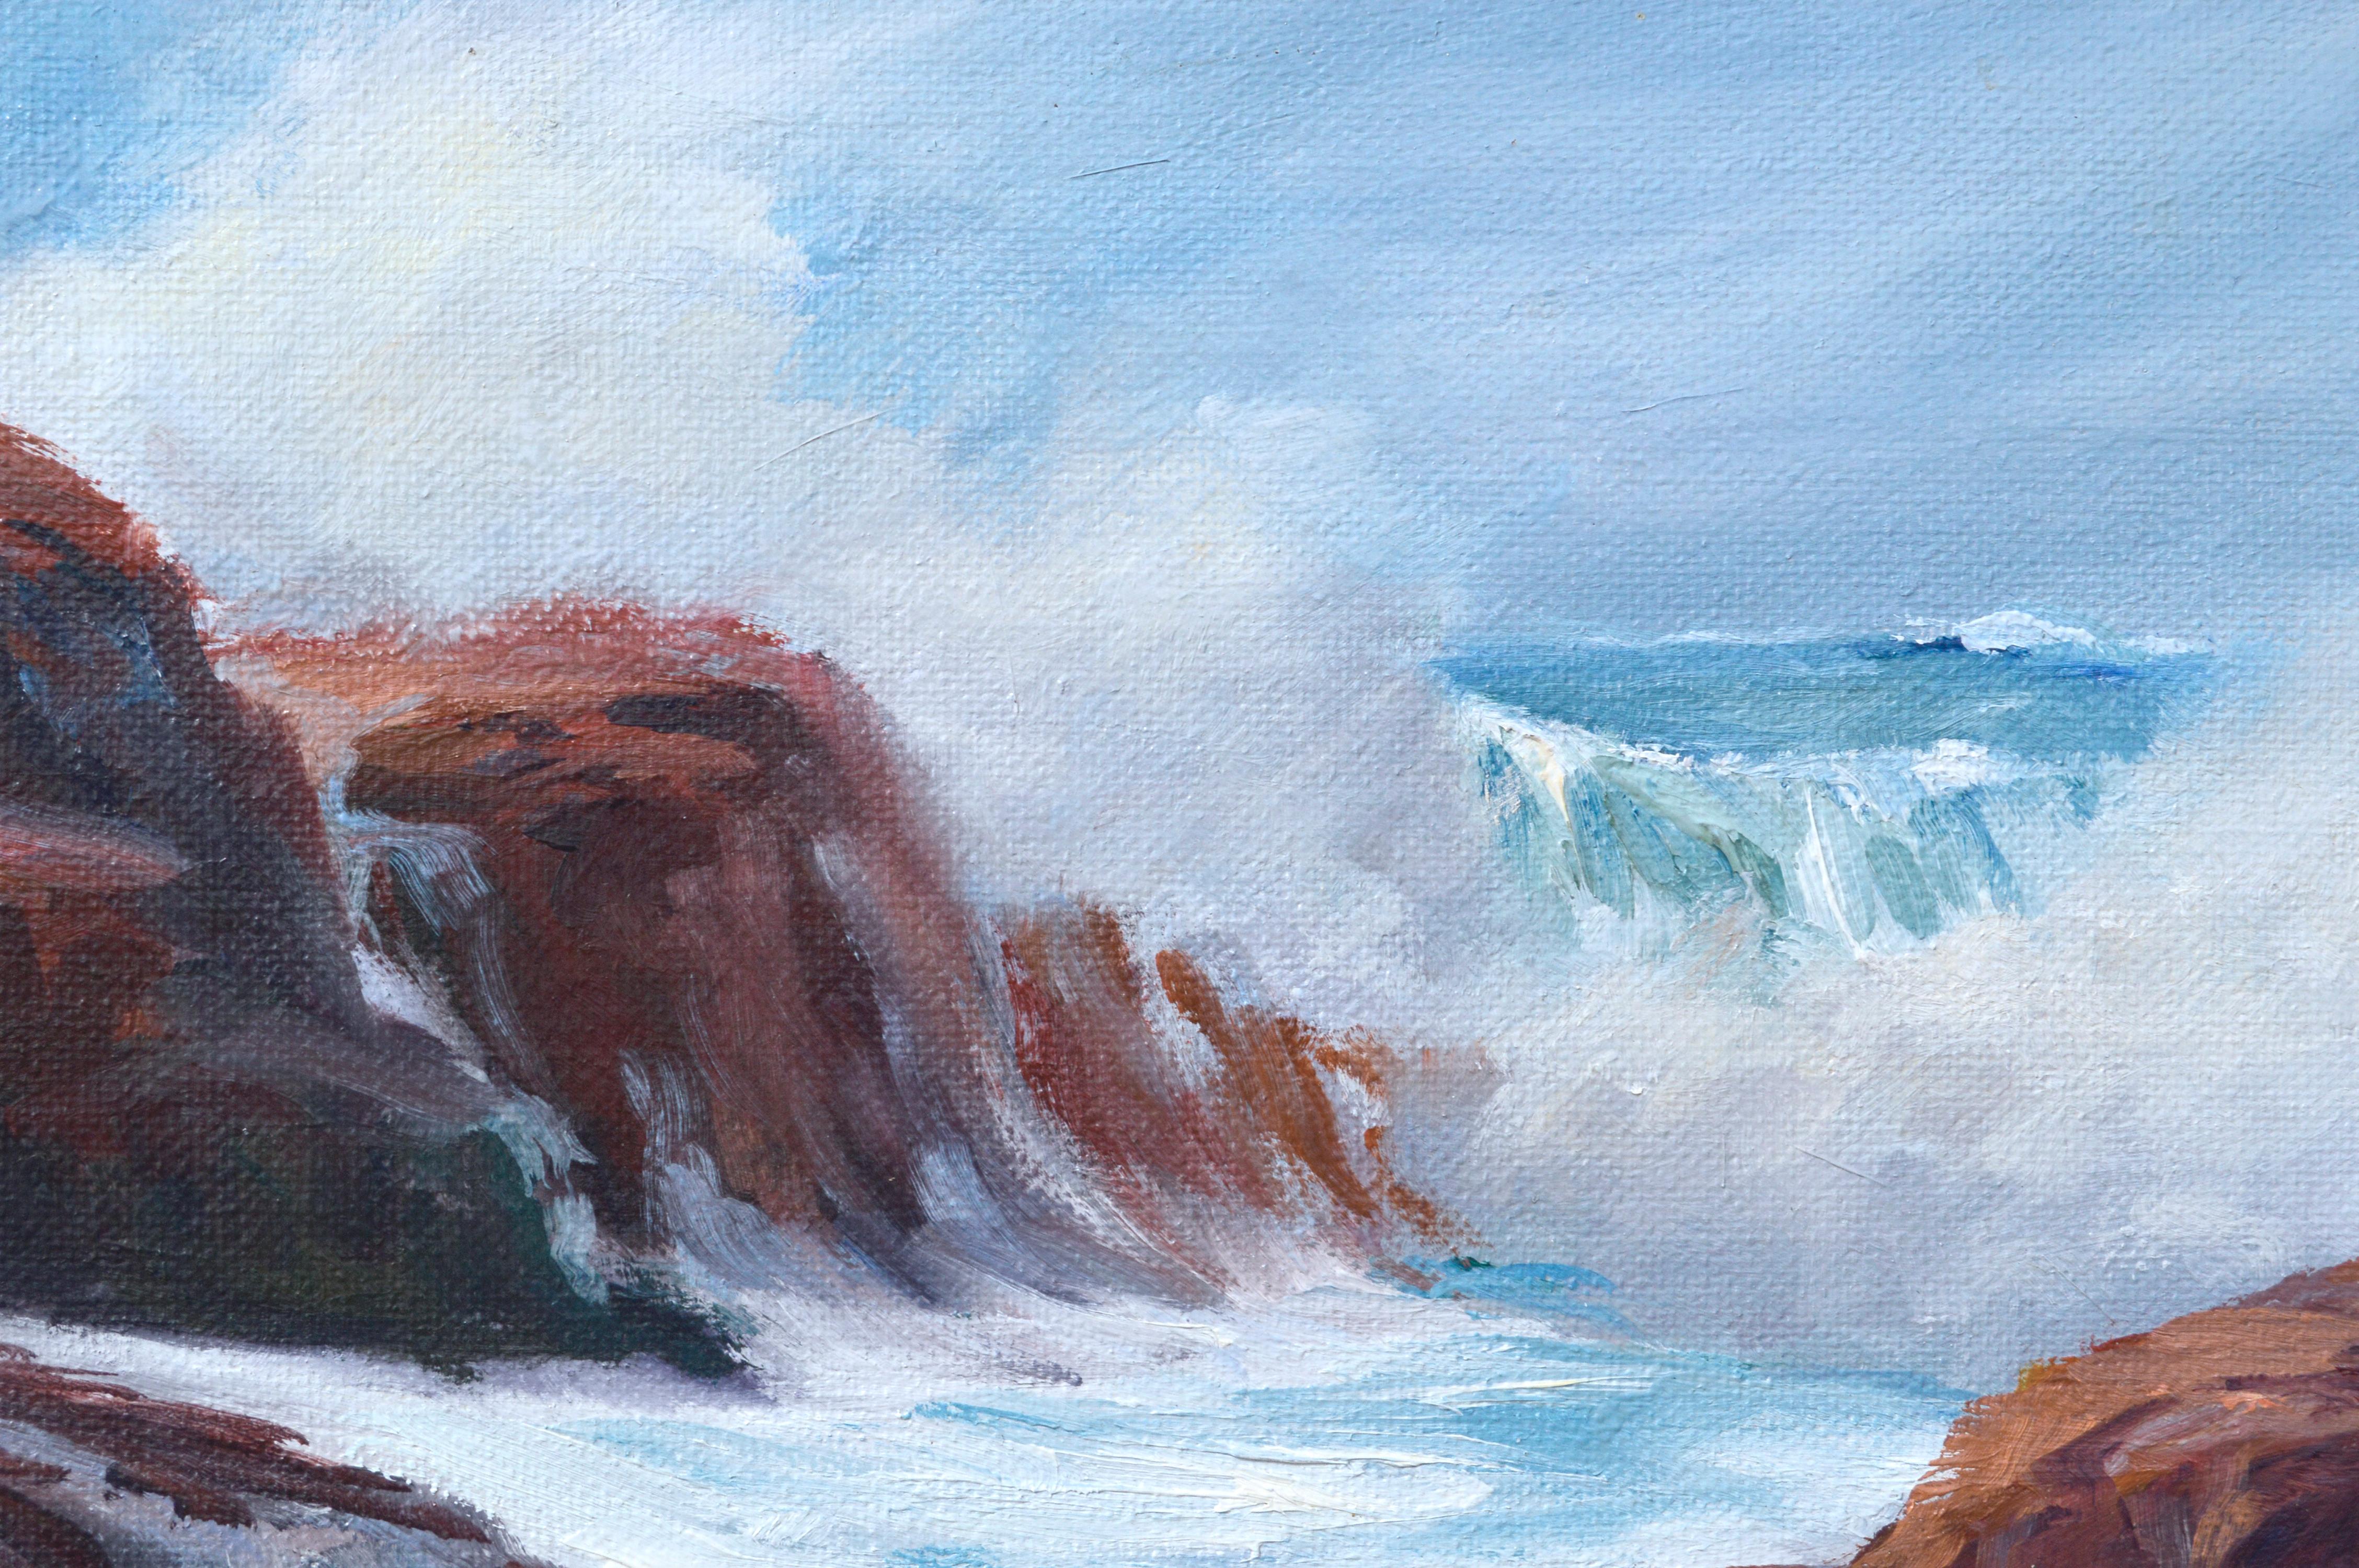 waves crashing on cliff drawing